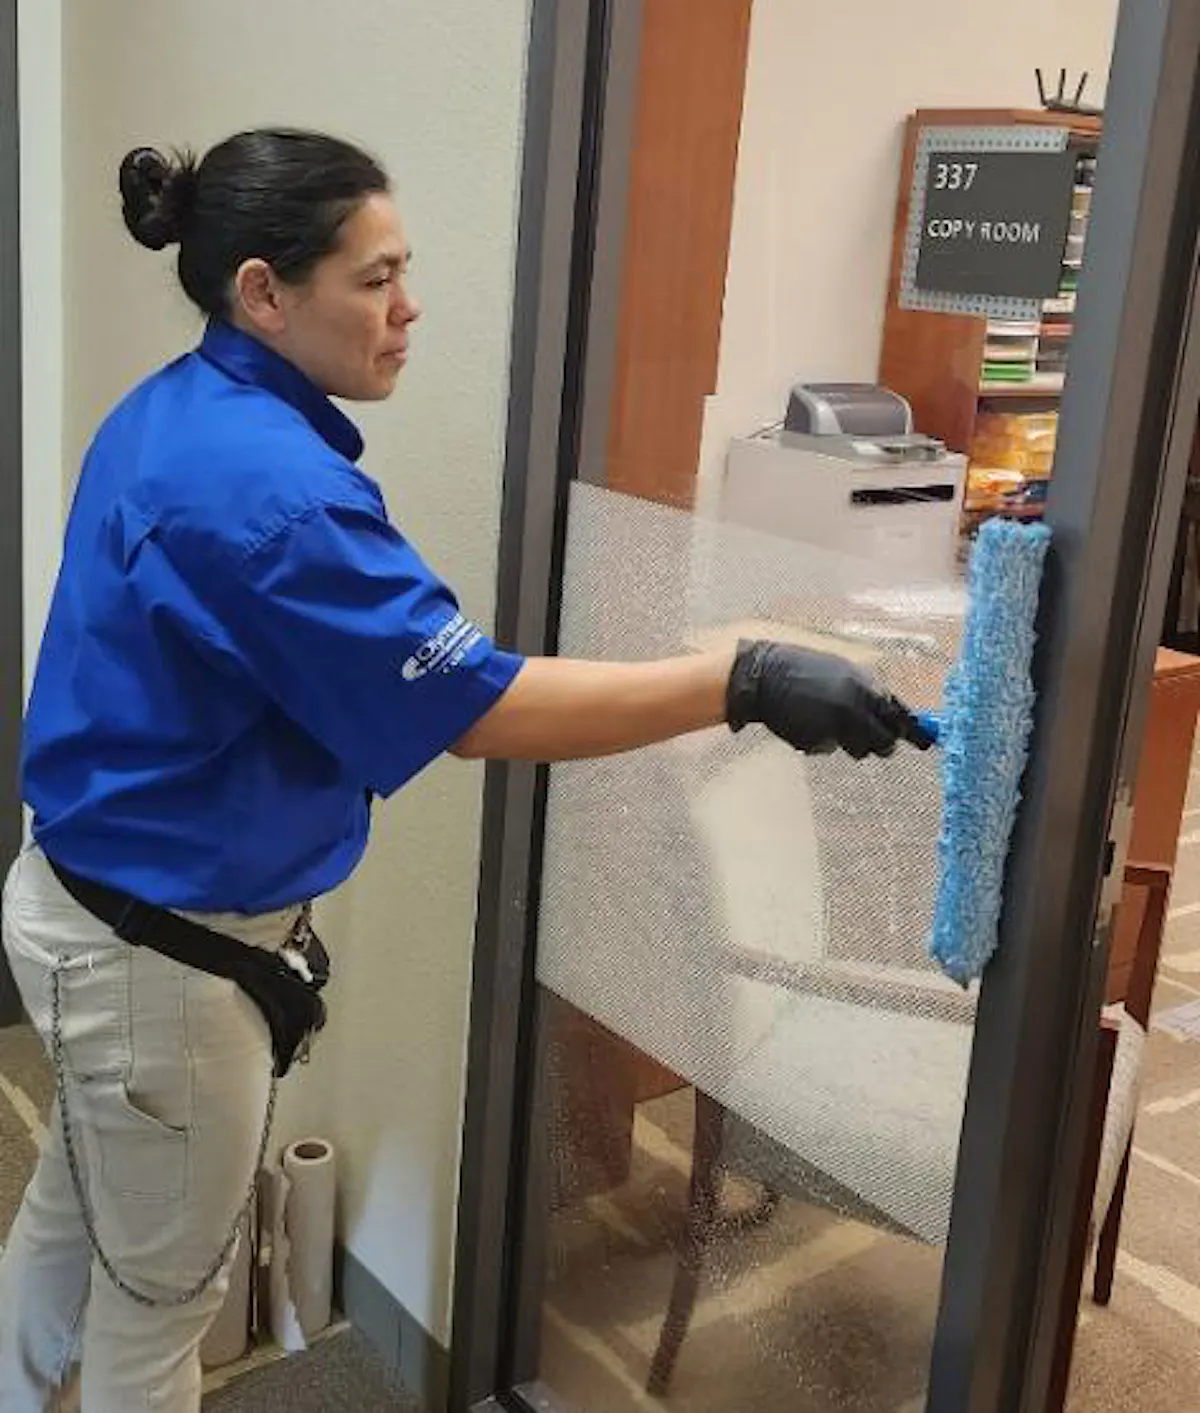 KBS crew member cleans an office window